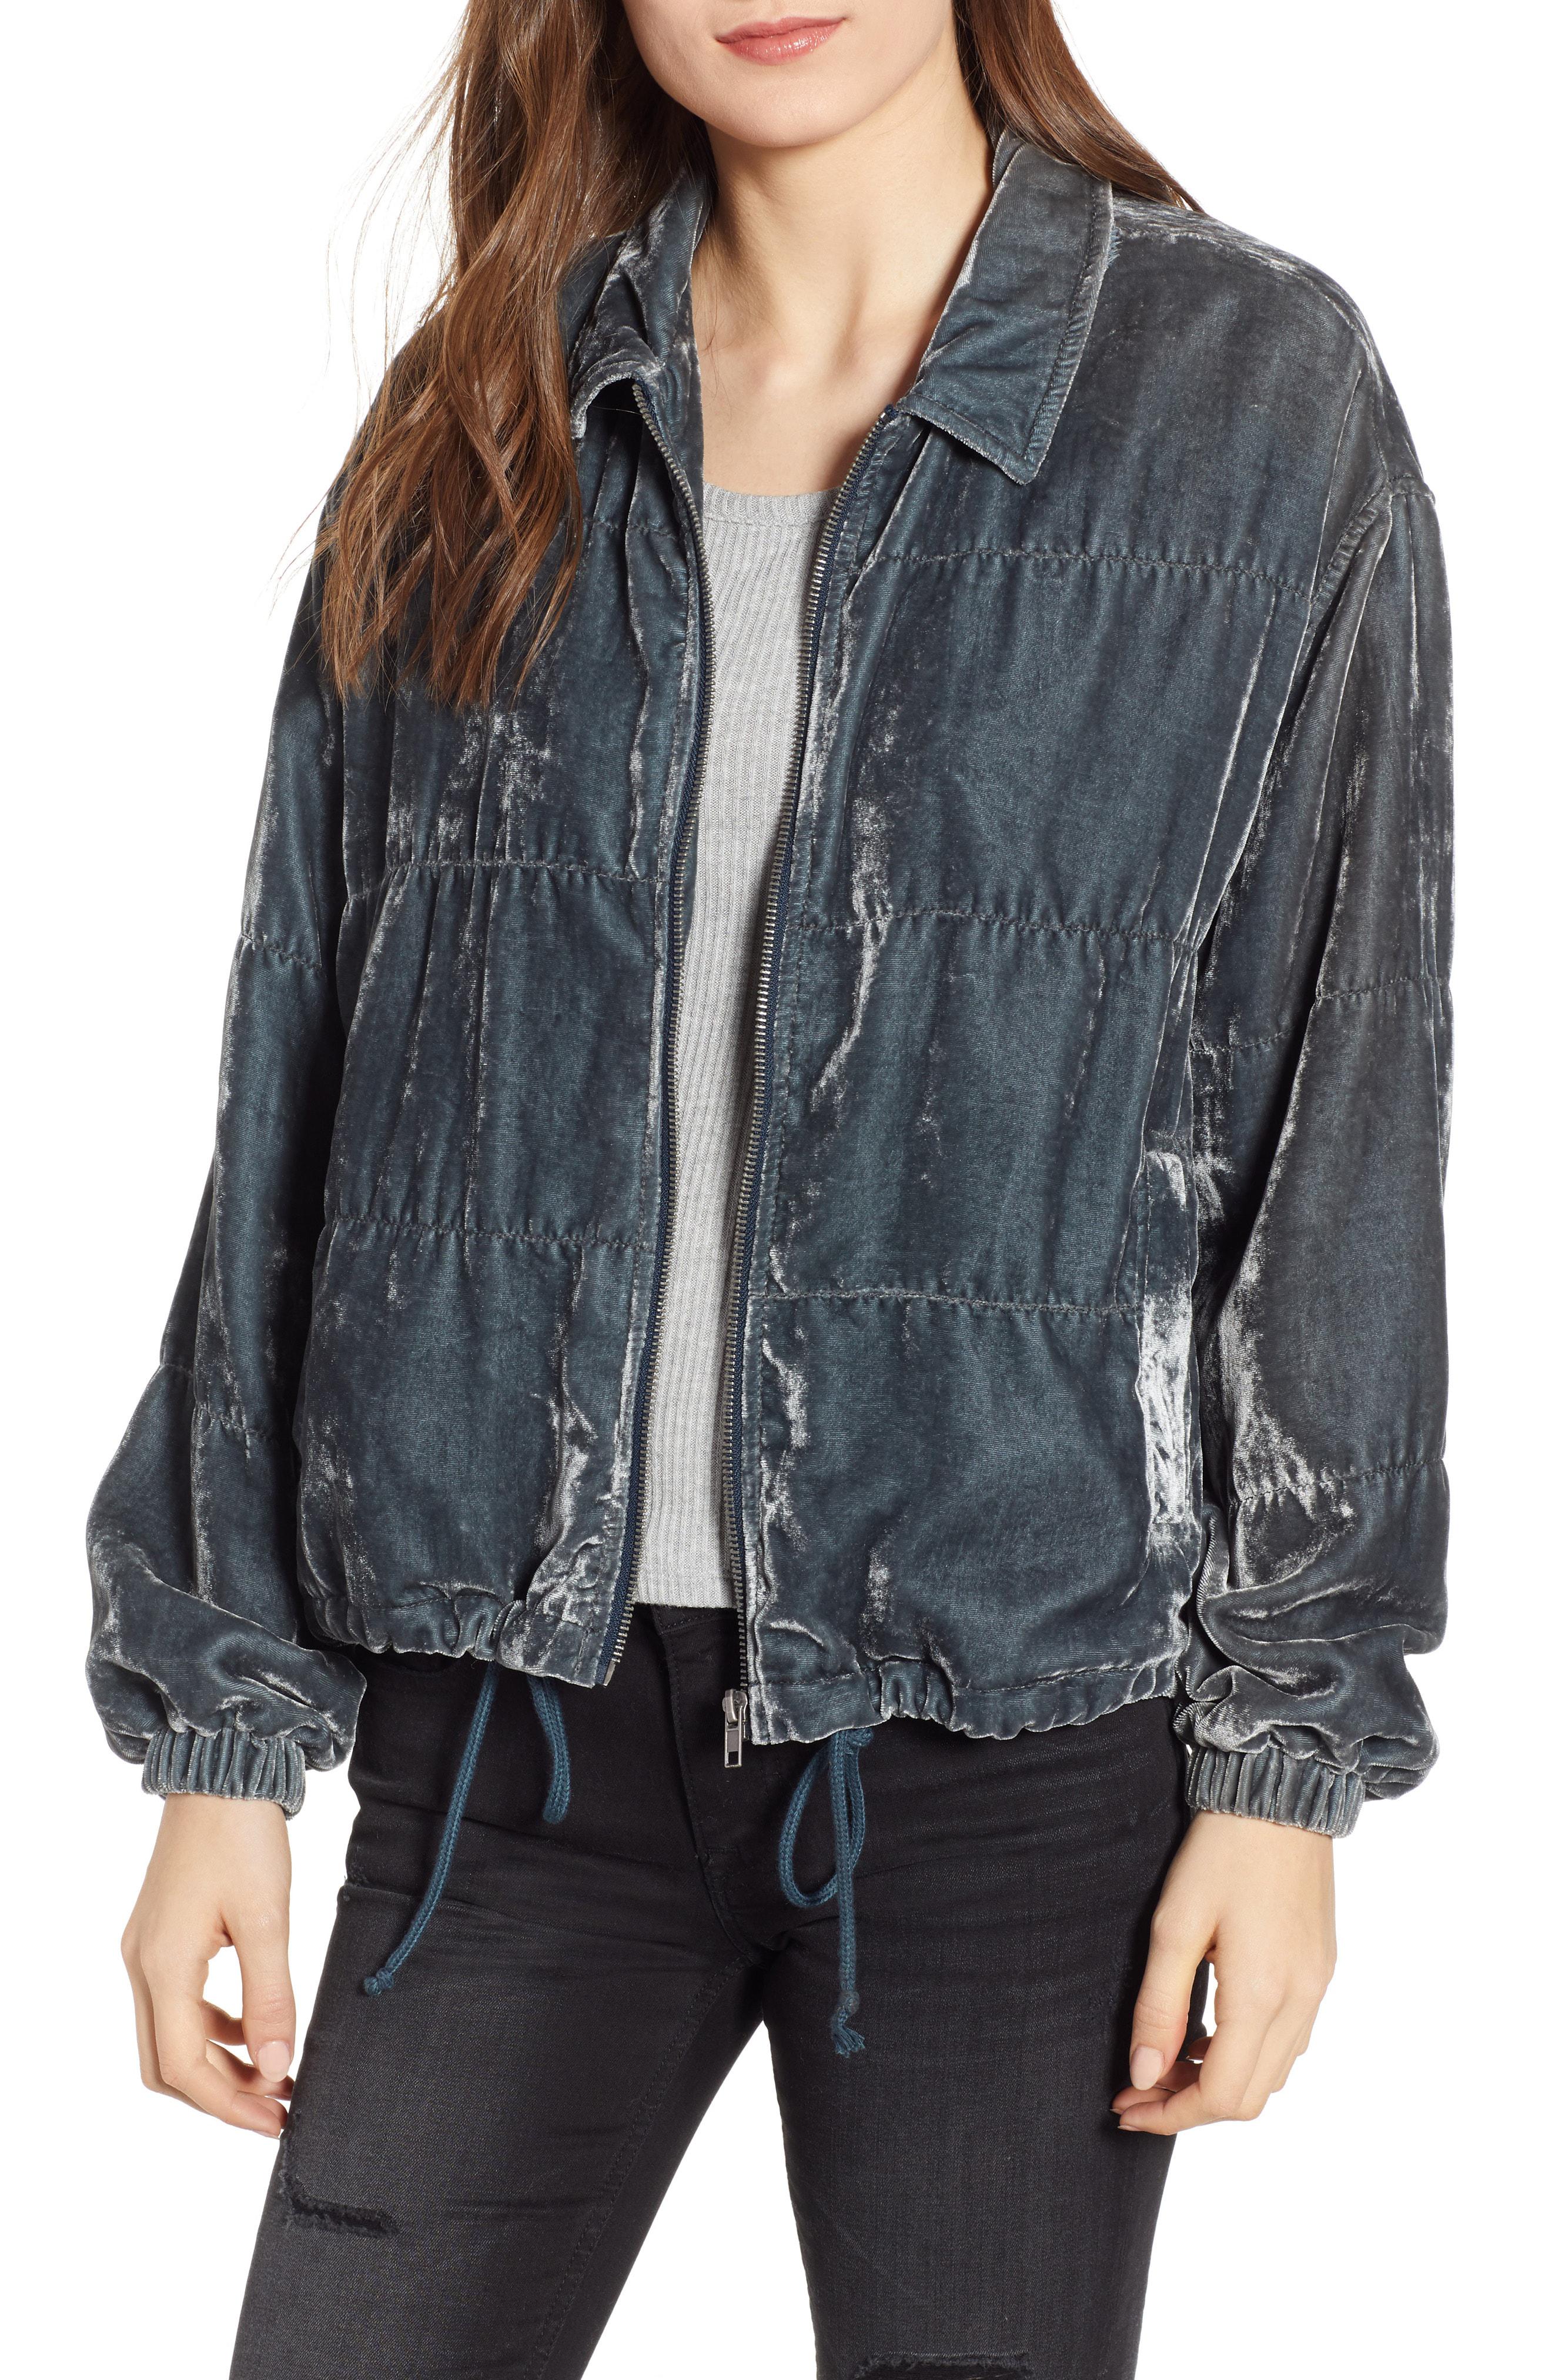 Lyst - BB Dakota Chillax Velvet Jacket in Gray